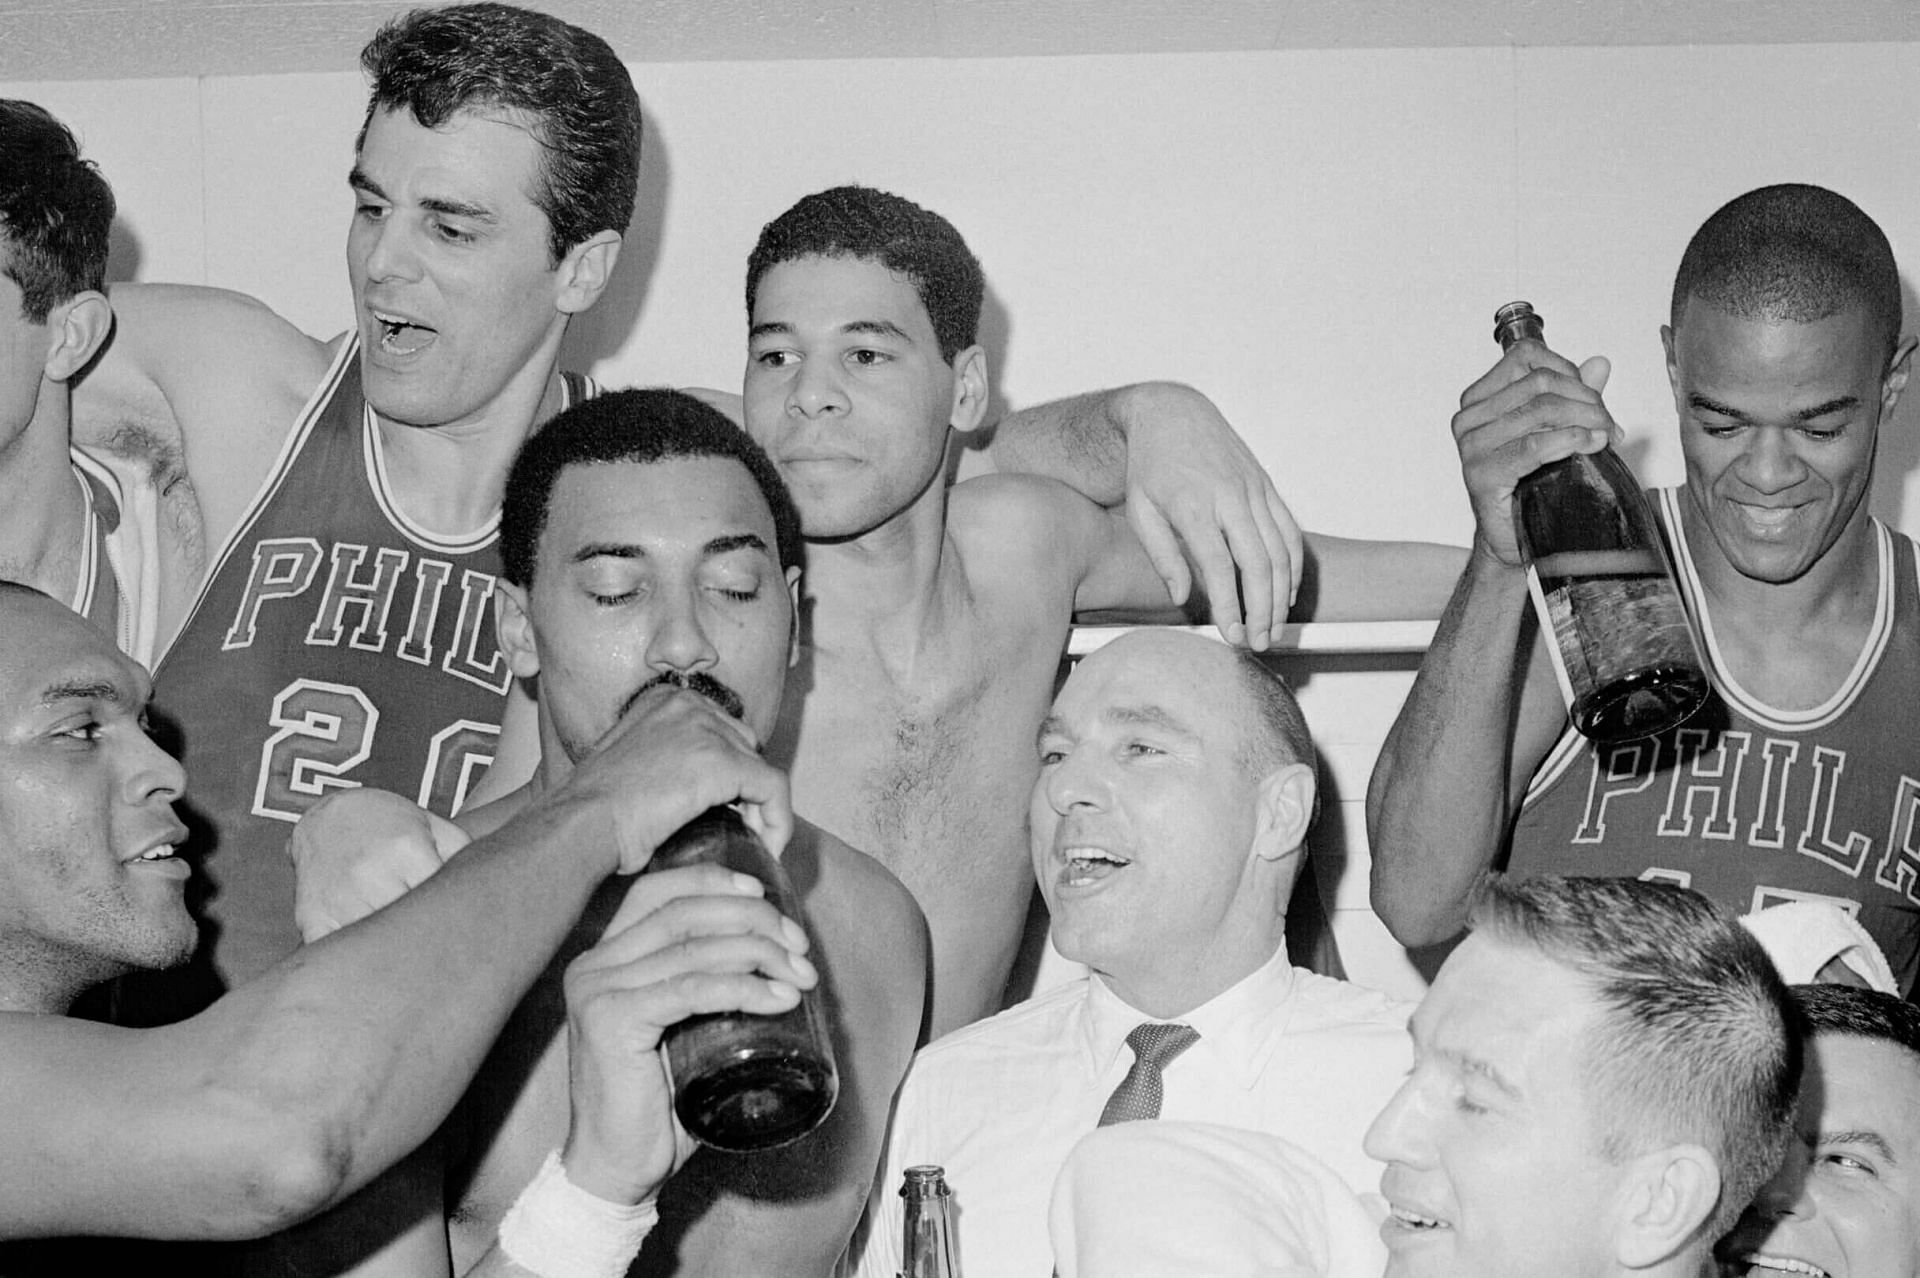 Wilt Chamberlain winning the 1967 NBA Title